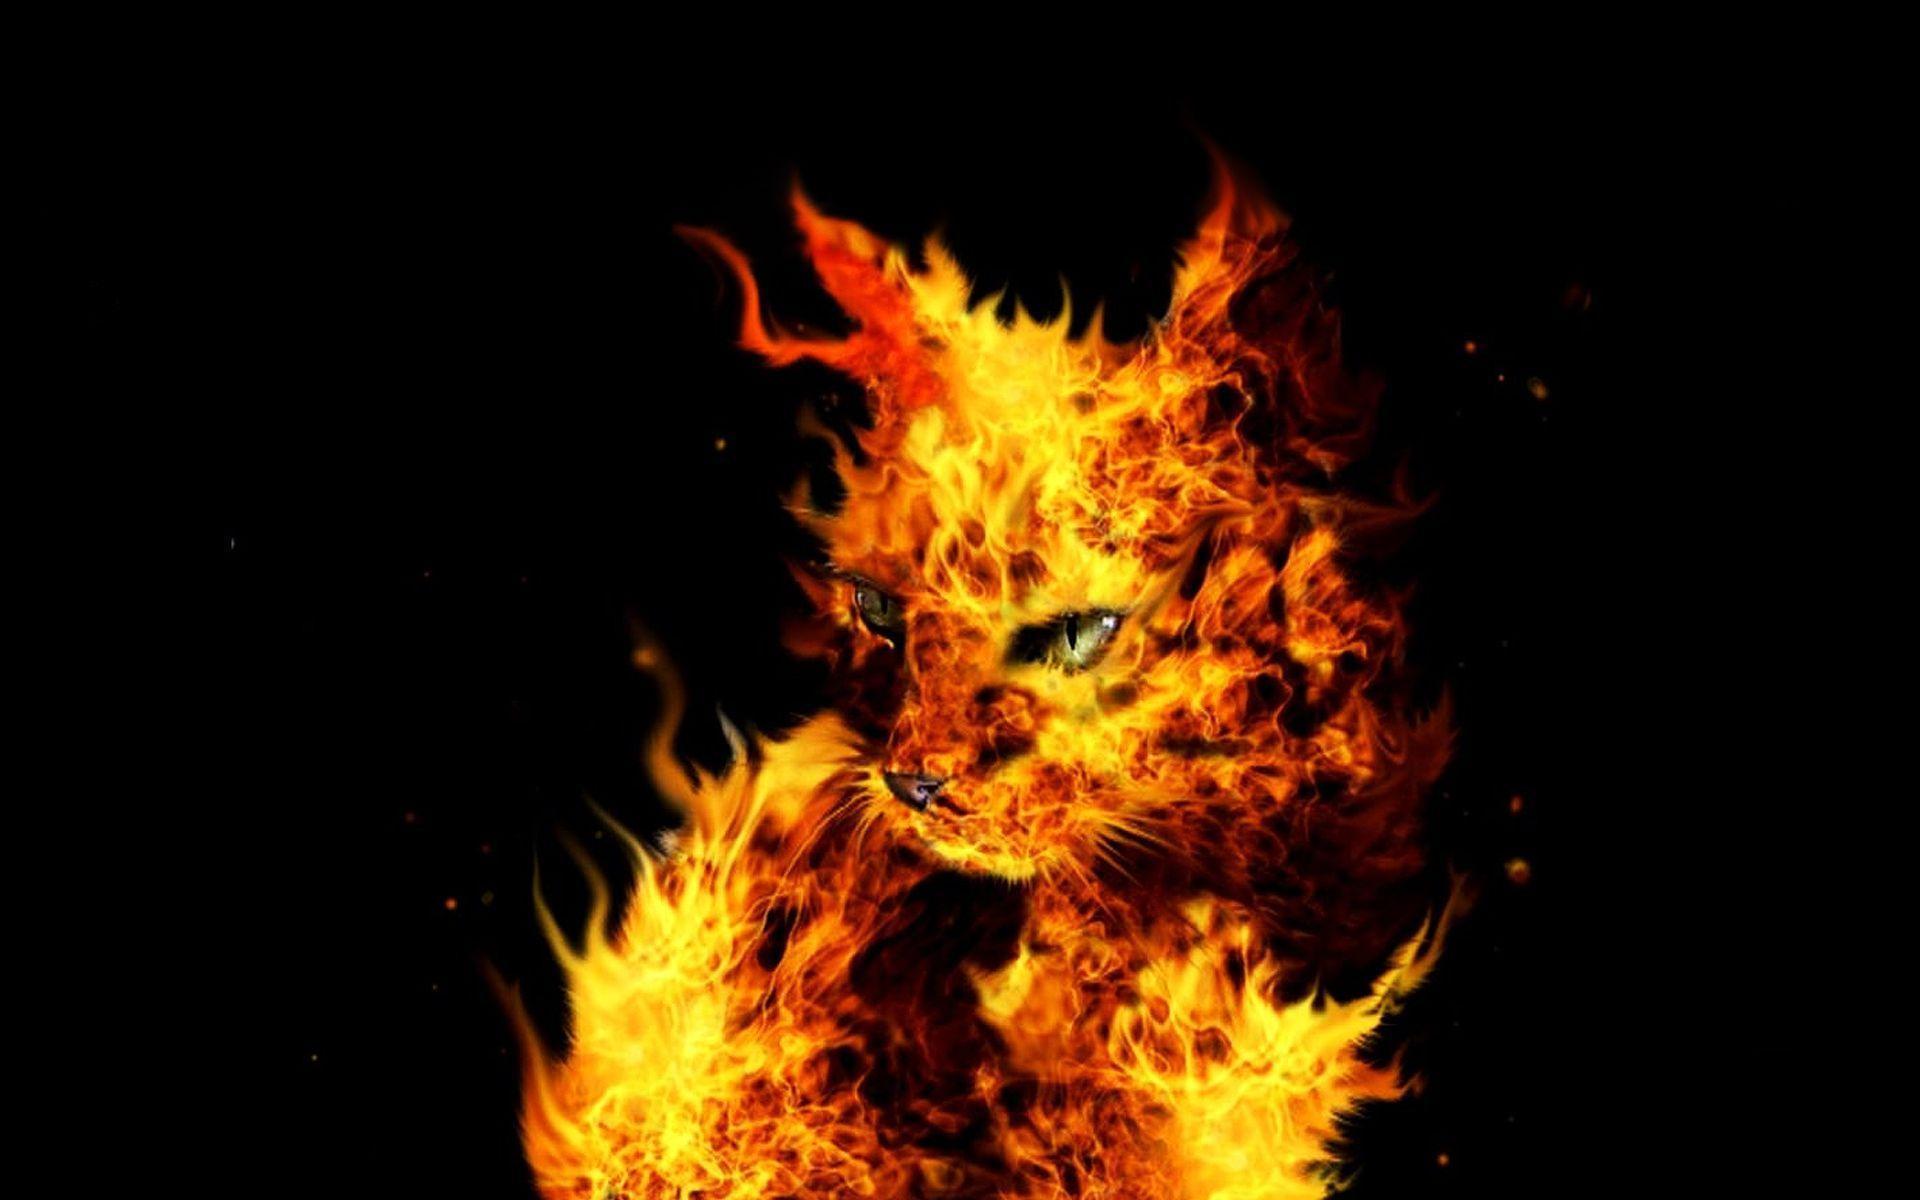 Artistic Flames Wallpaper 1920x1200 px Free Download